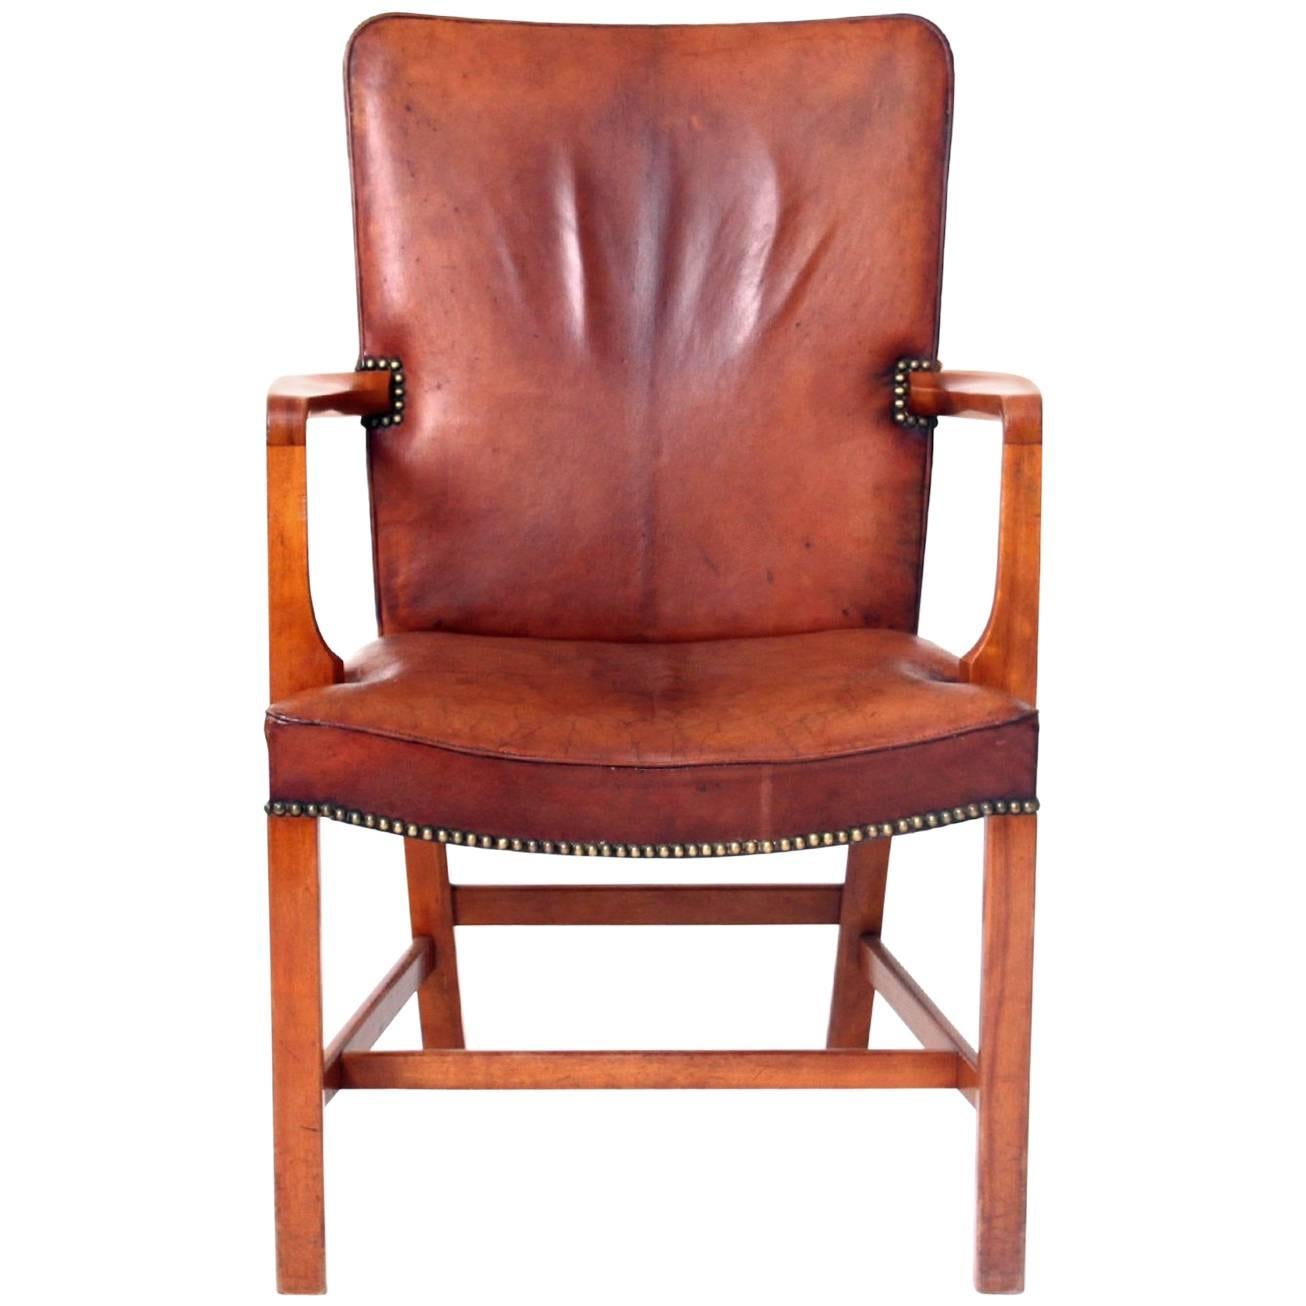 Kaare Klint, High Back Armchair in Original Niger Leather, 1940's. 